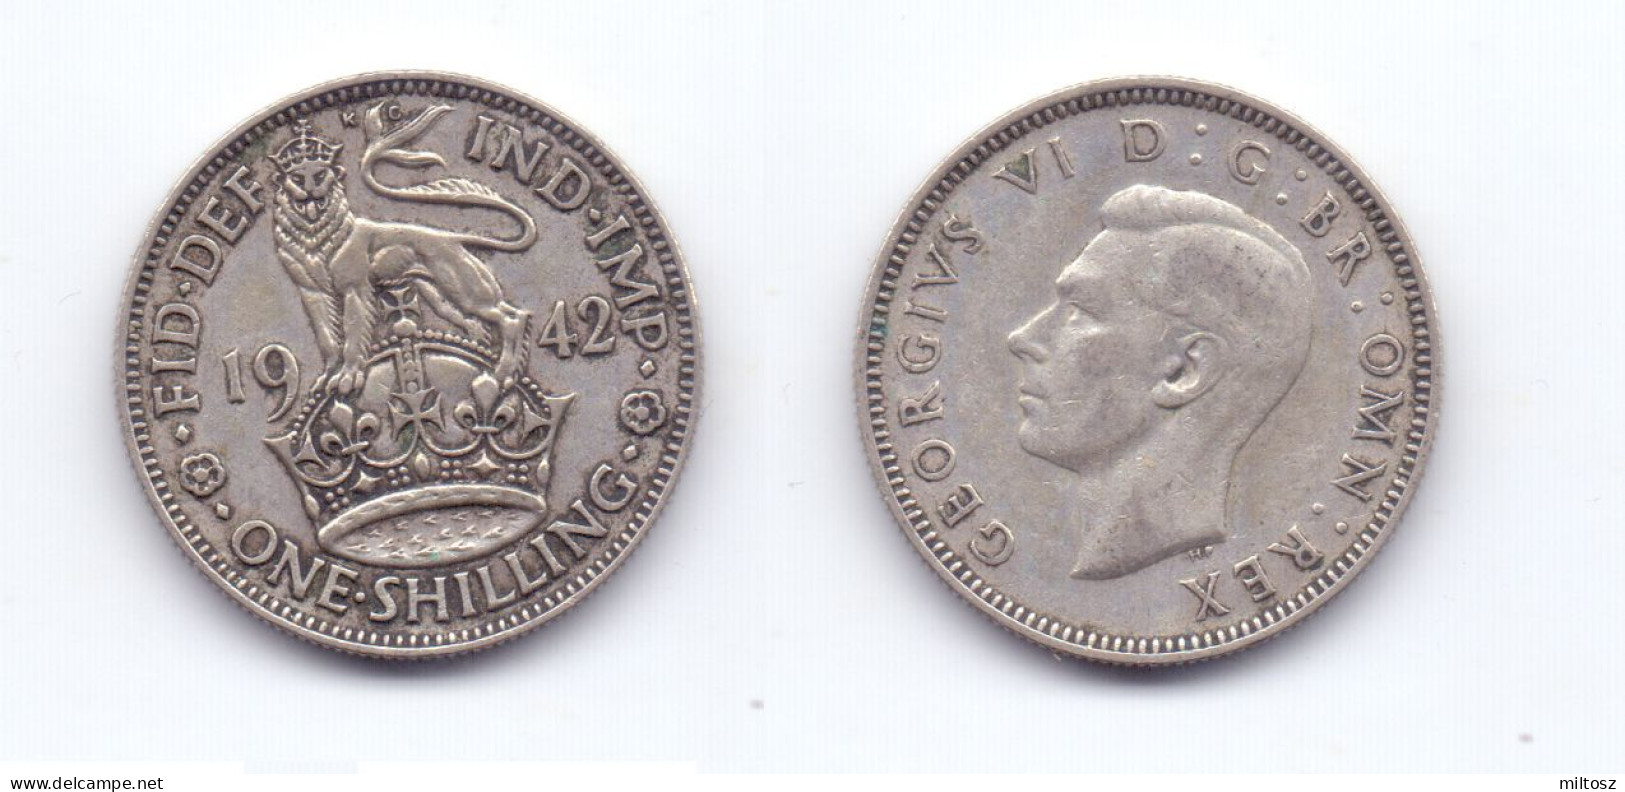 Great Britain 1 Shilling 1942 English Crest - I. 1 Shilling